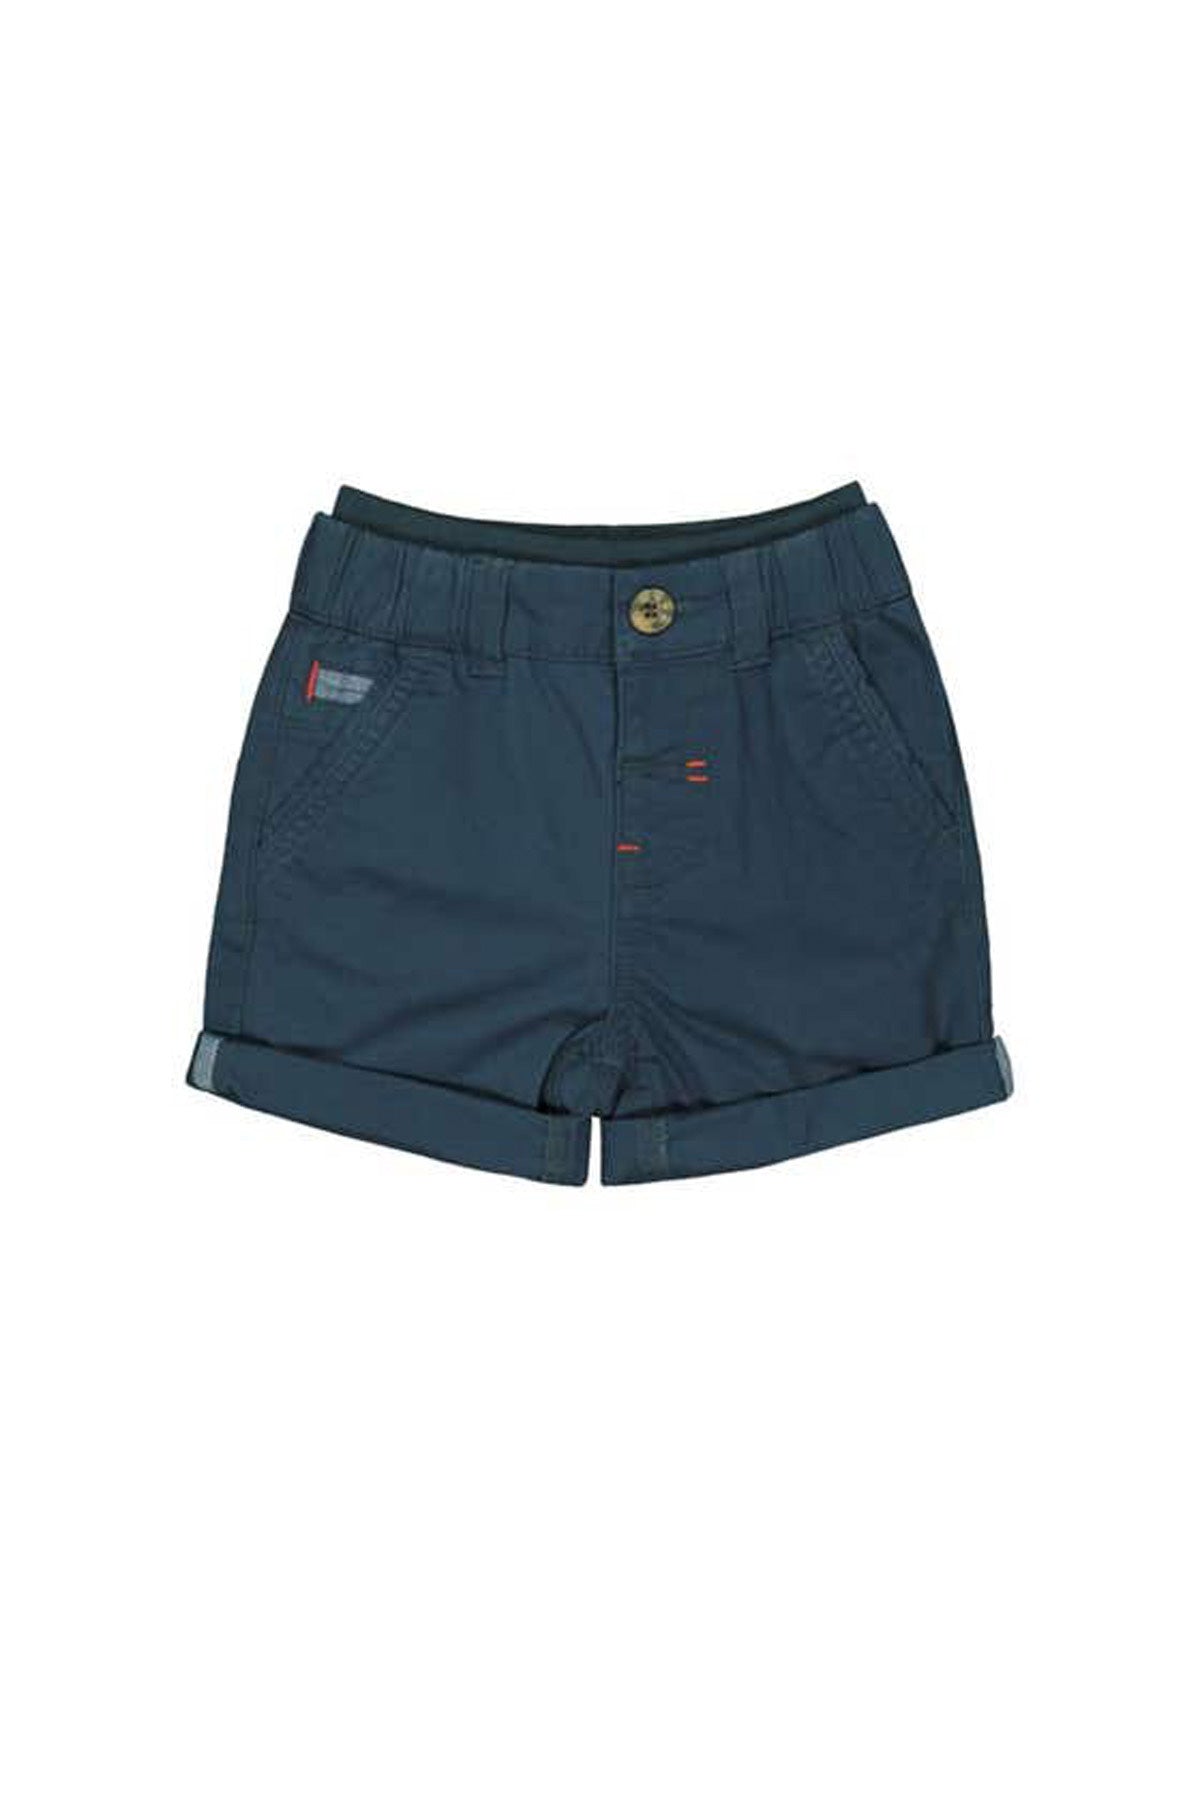 Shorts-Mini Boys-Navy